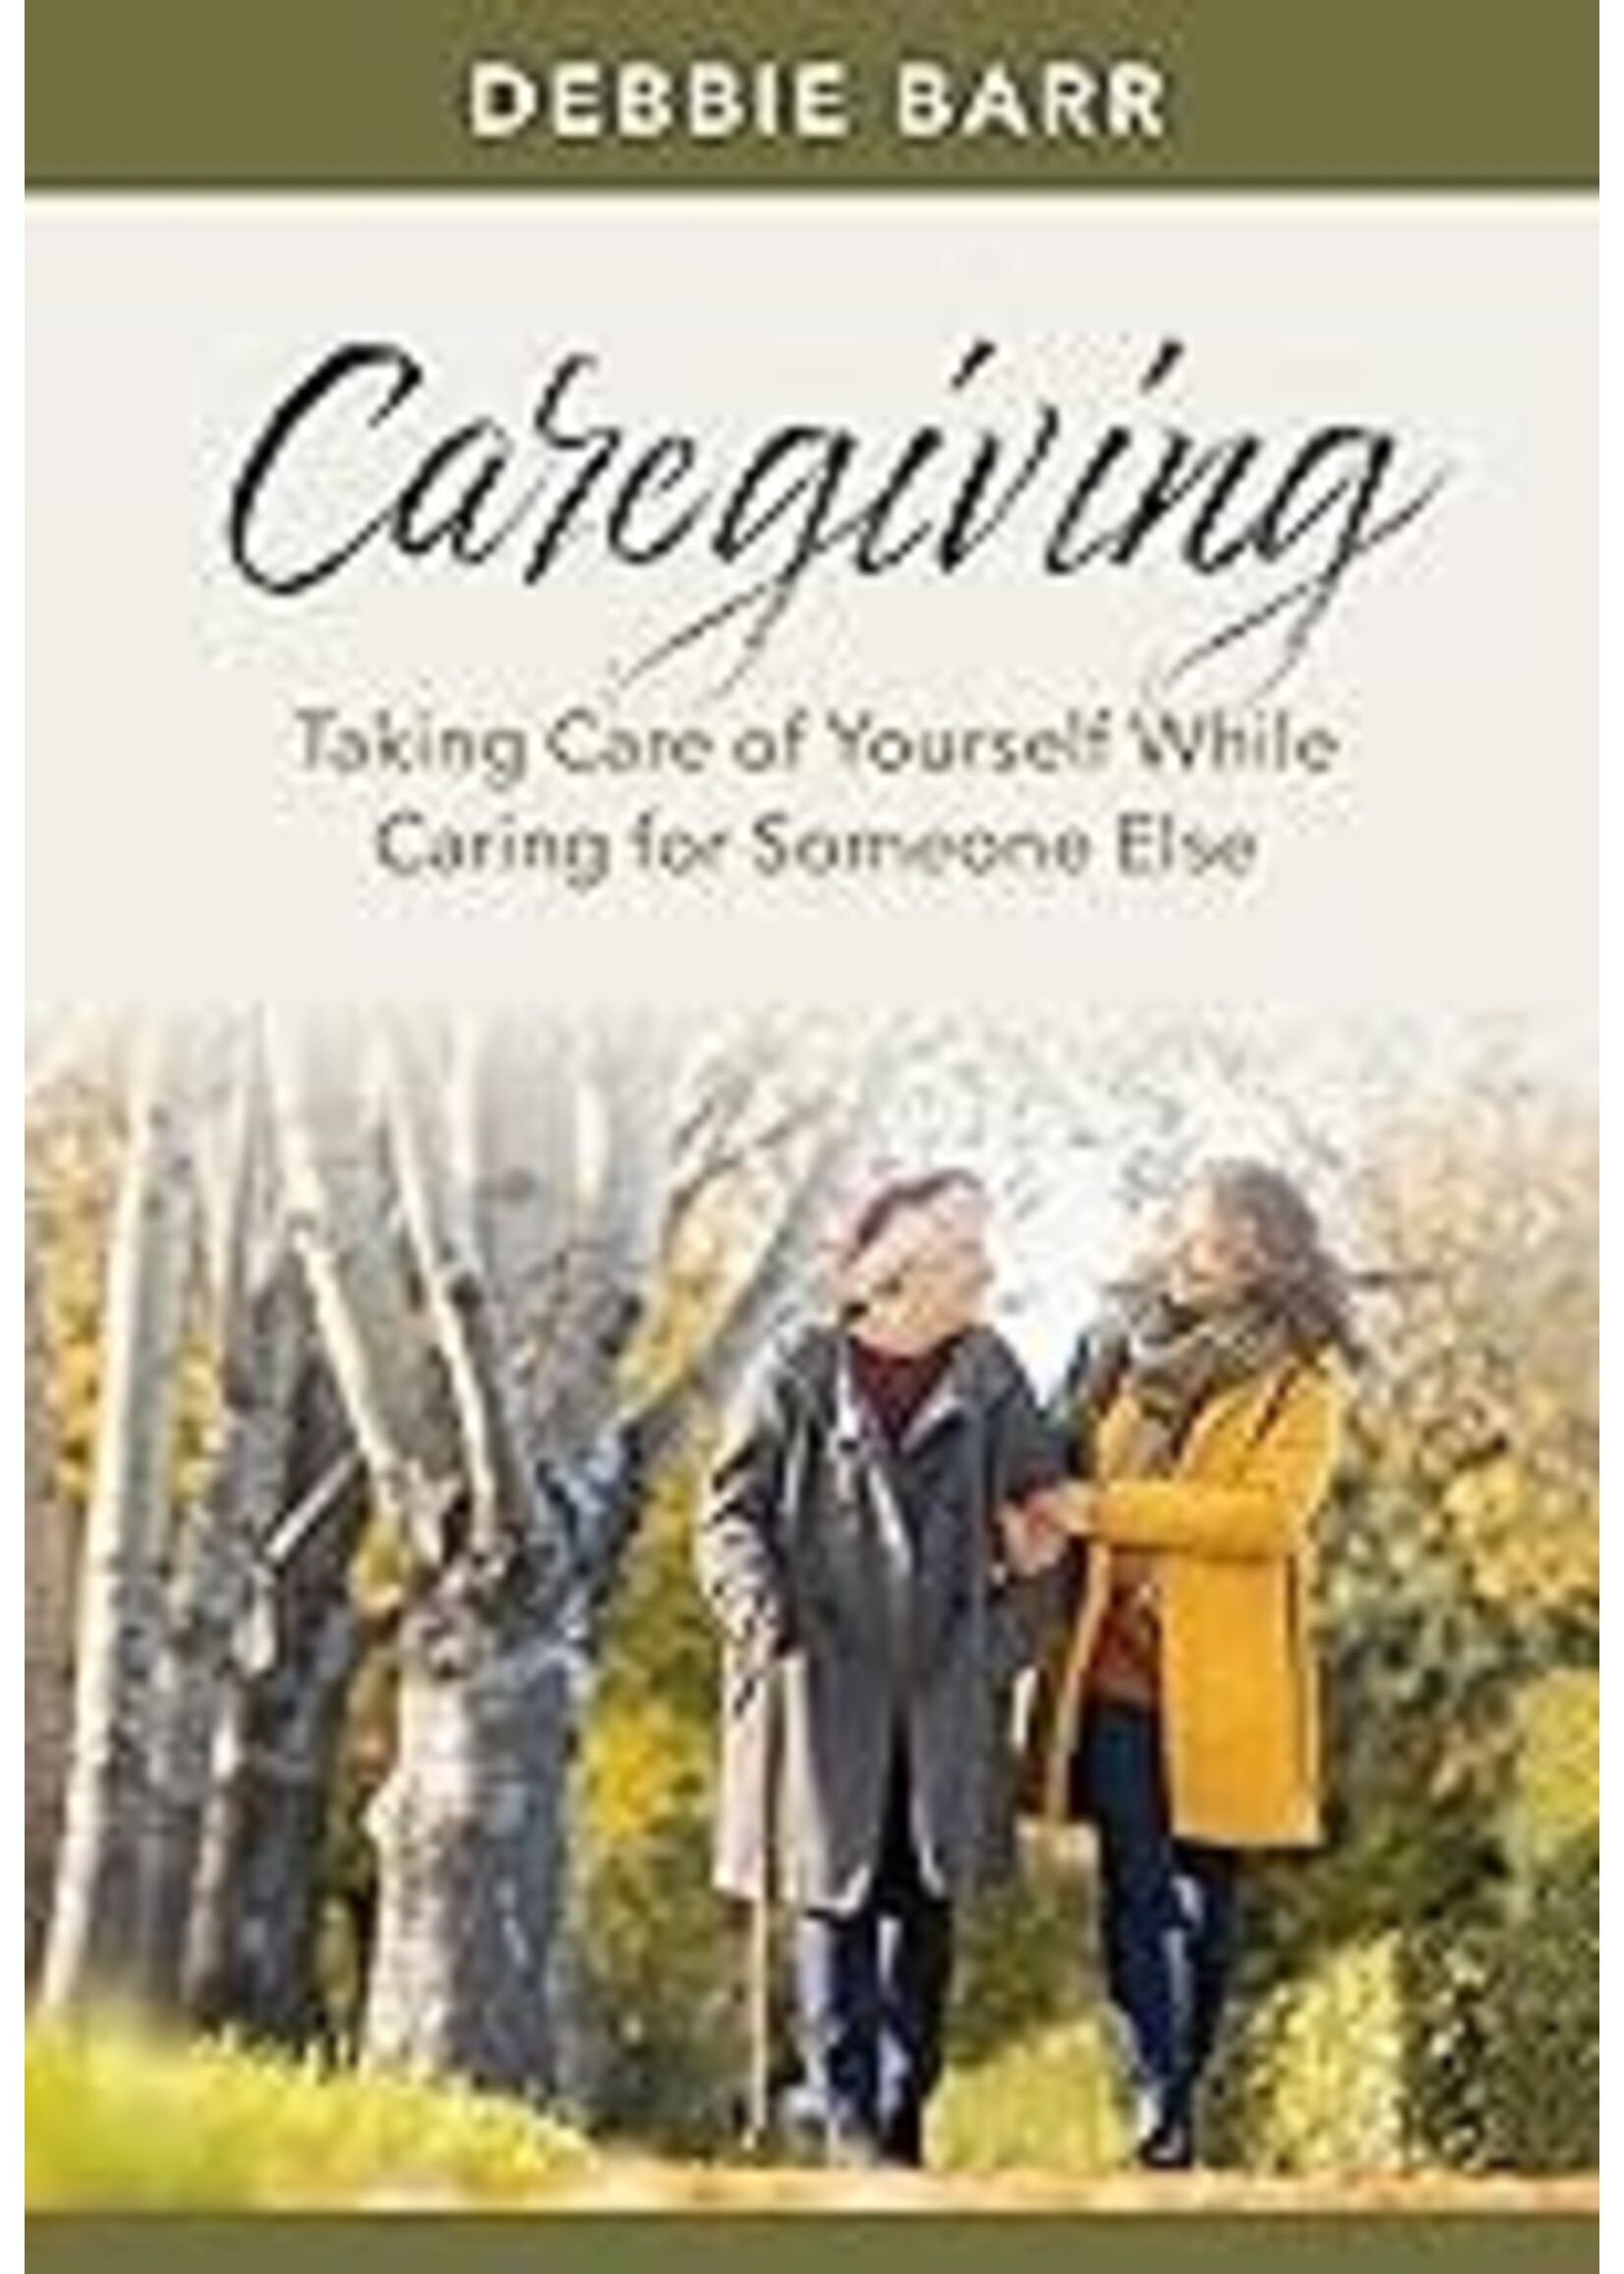 Caregiving (Hope And Healing)